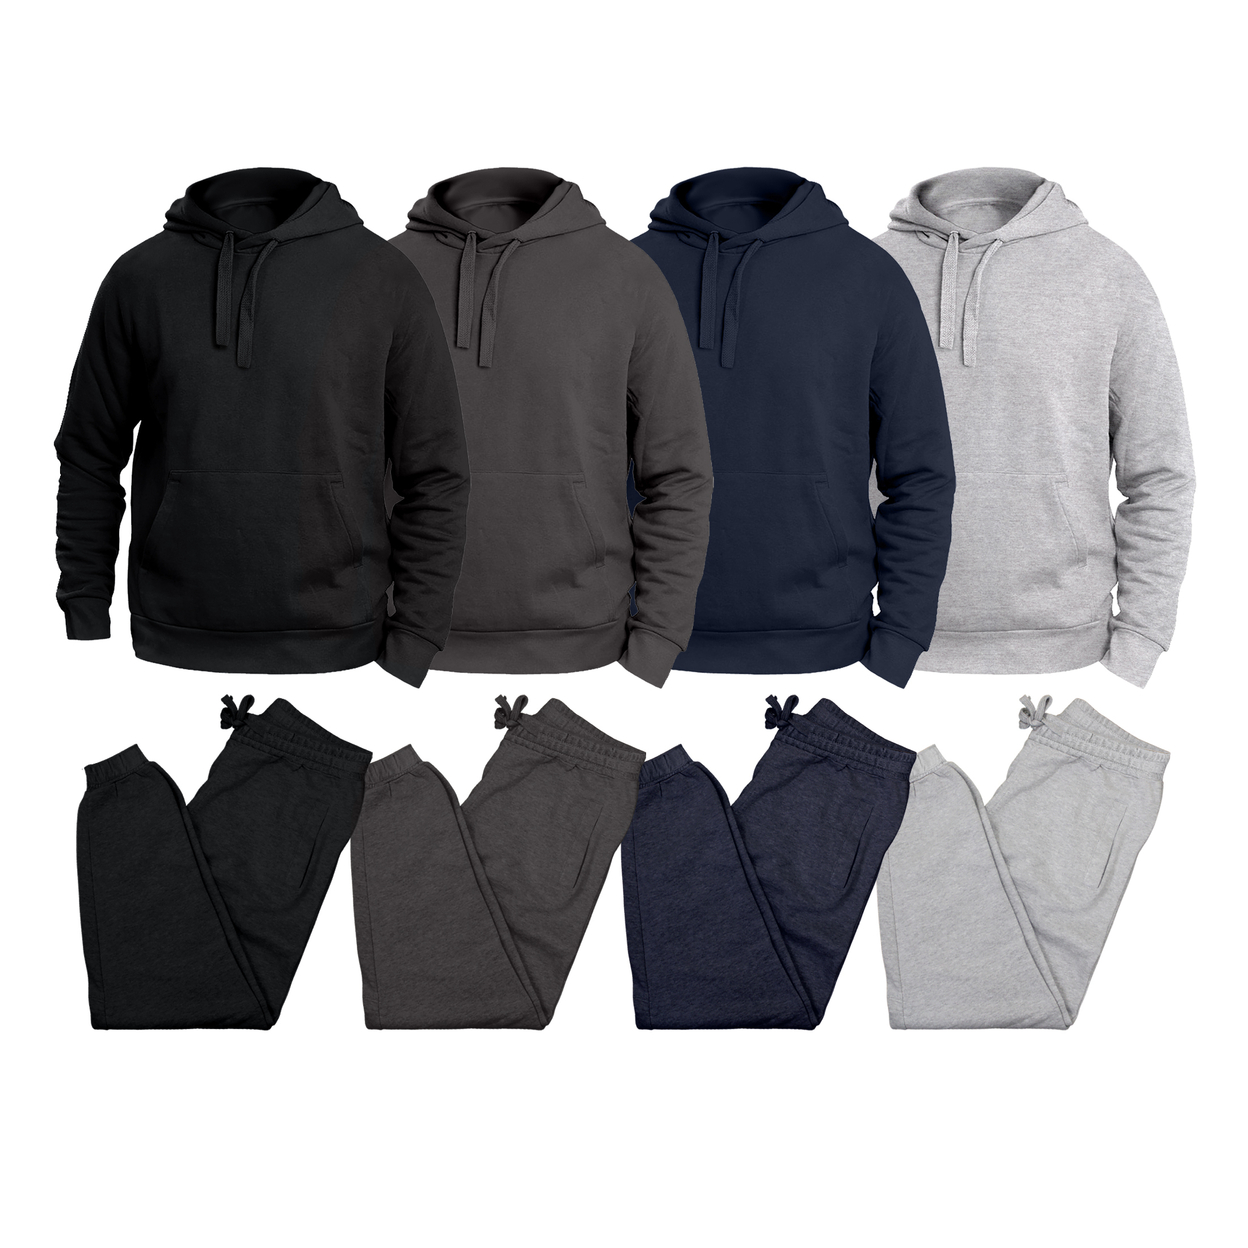 Men's Big & Tall Winter Warm Cozy Athletic Fleece Lined Multi-Pocket Cargo Sweatsuit - Black, Xx-large